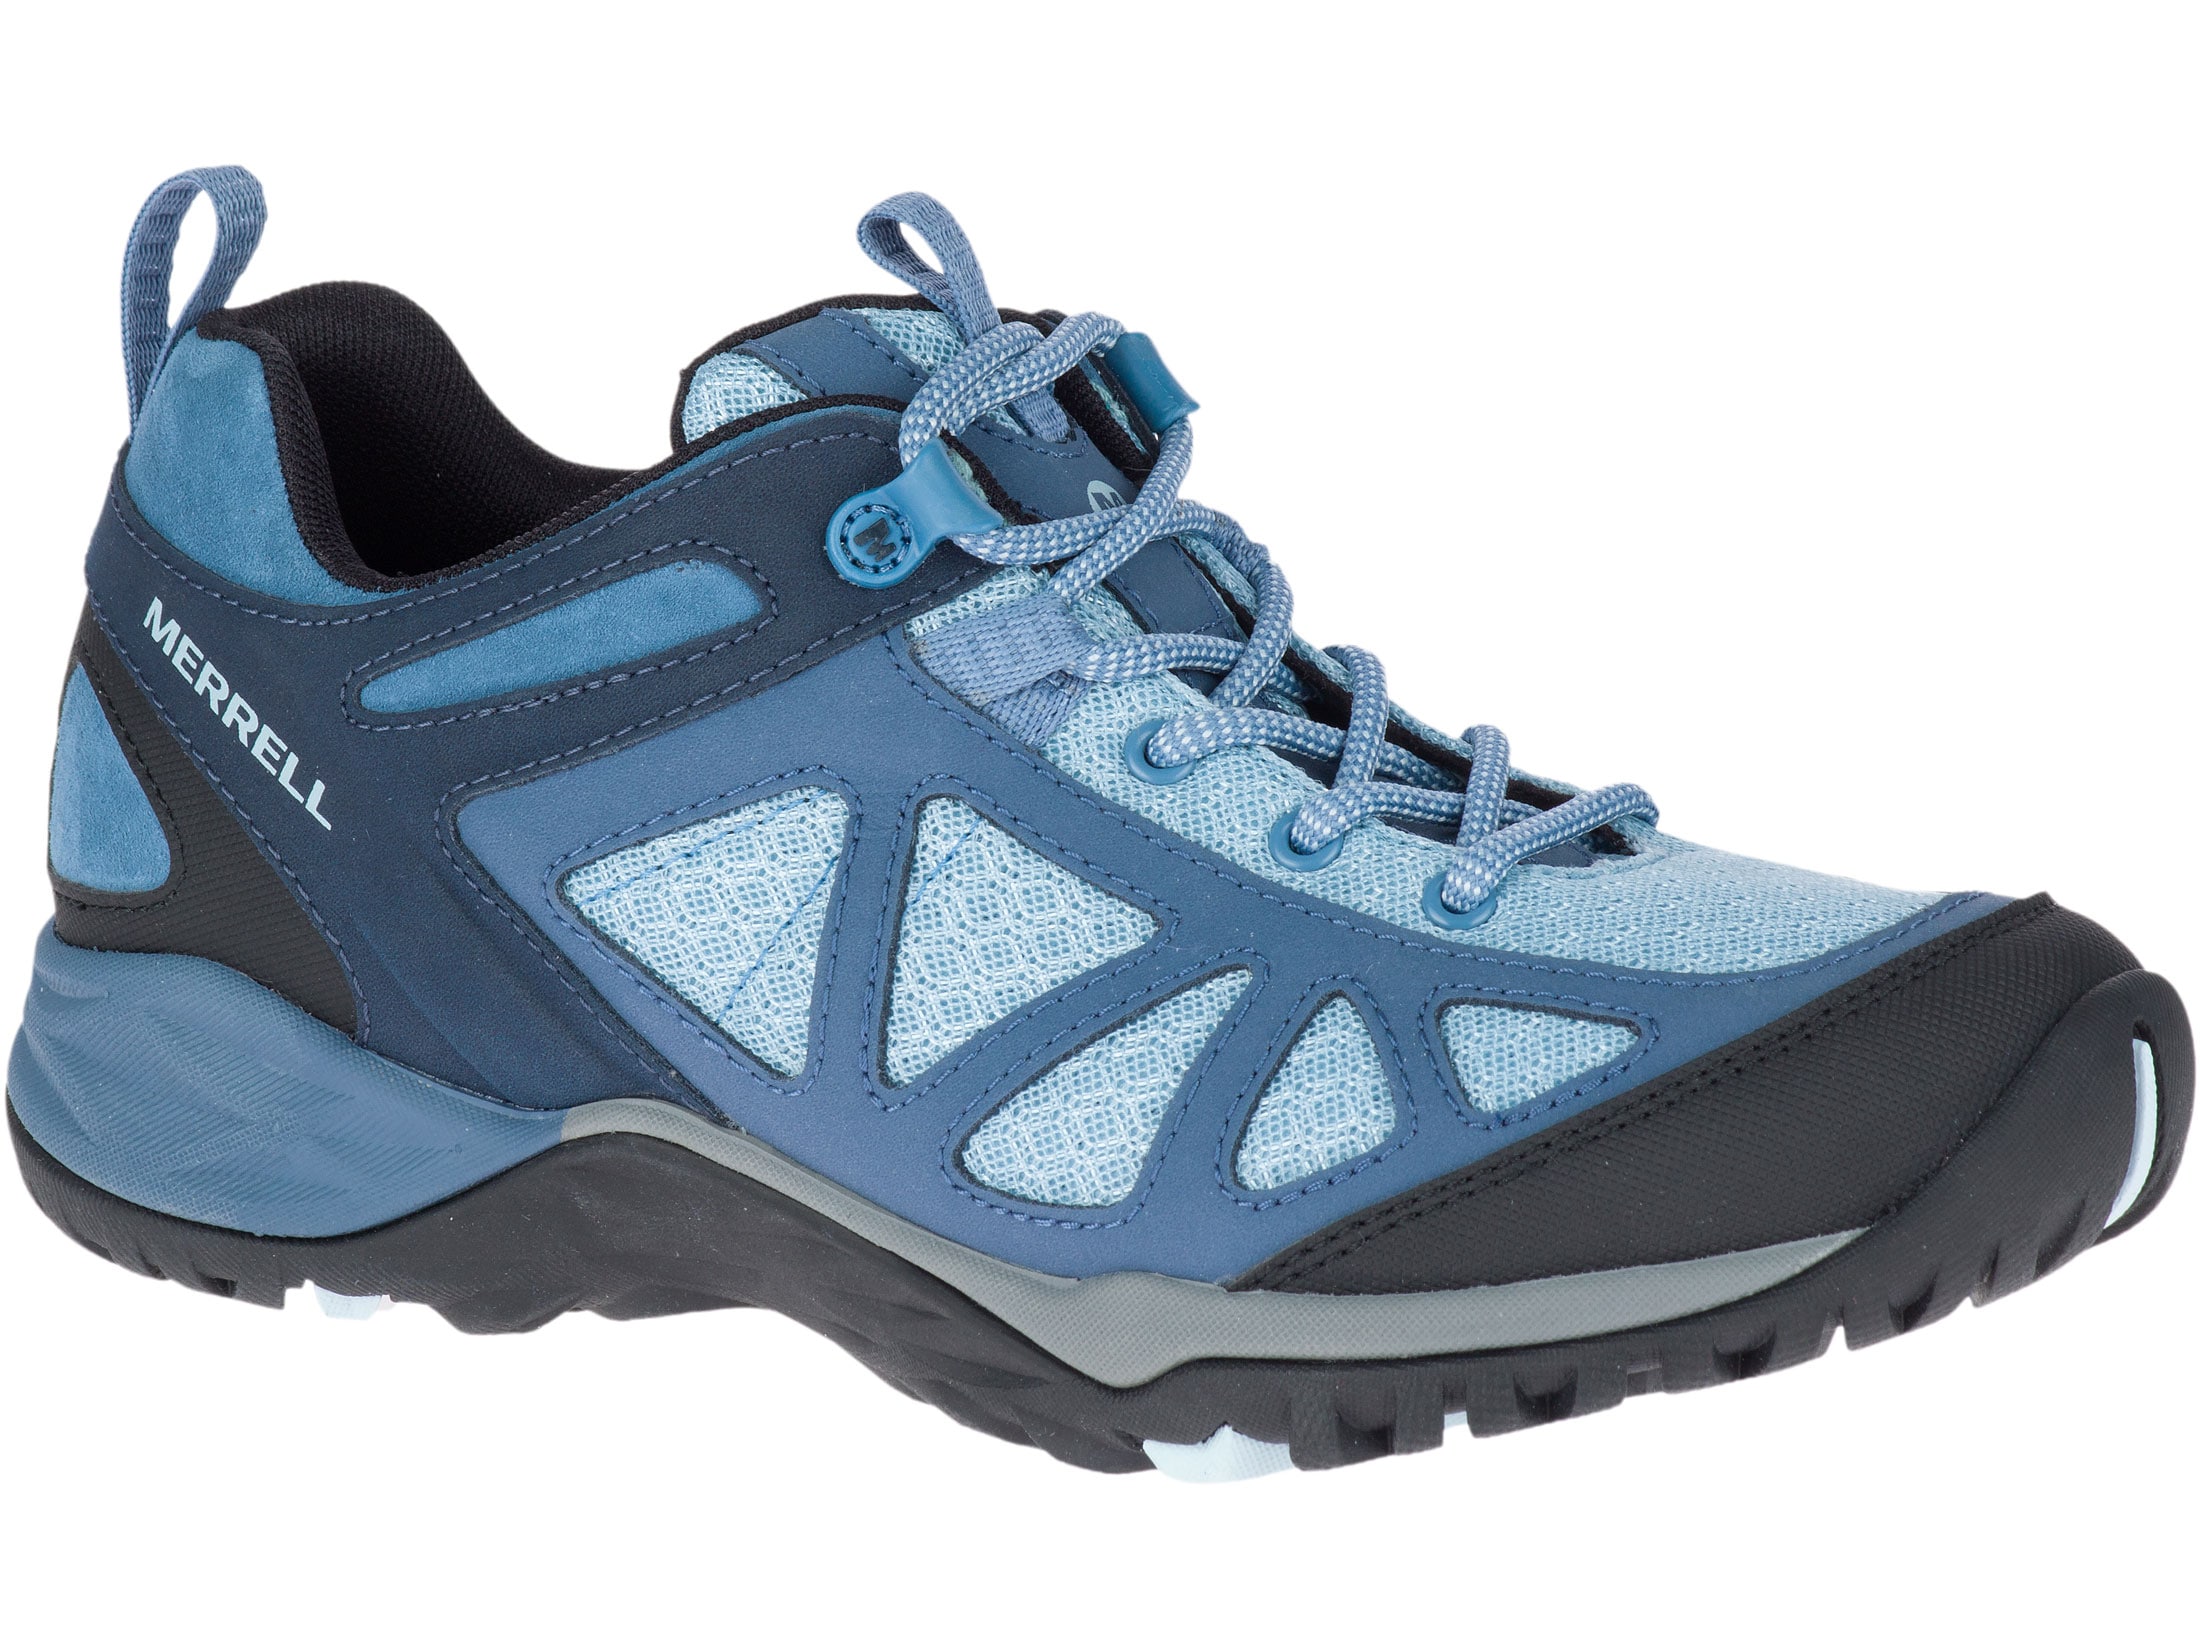 Merrell Siren Sport Q2 4 Hiking Shoes Leather/Nylon Blue Women's 9 D